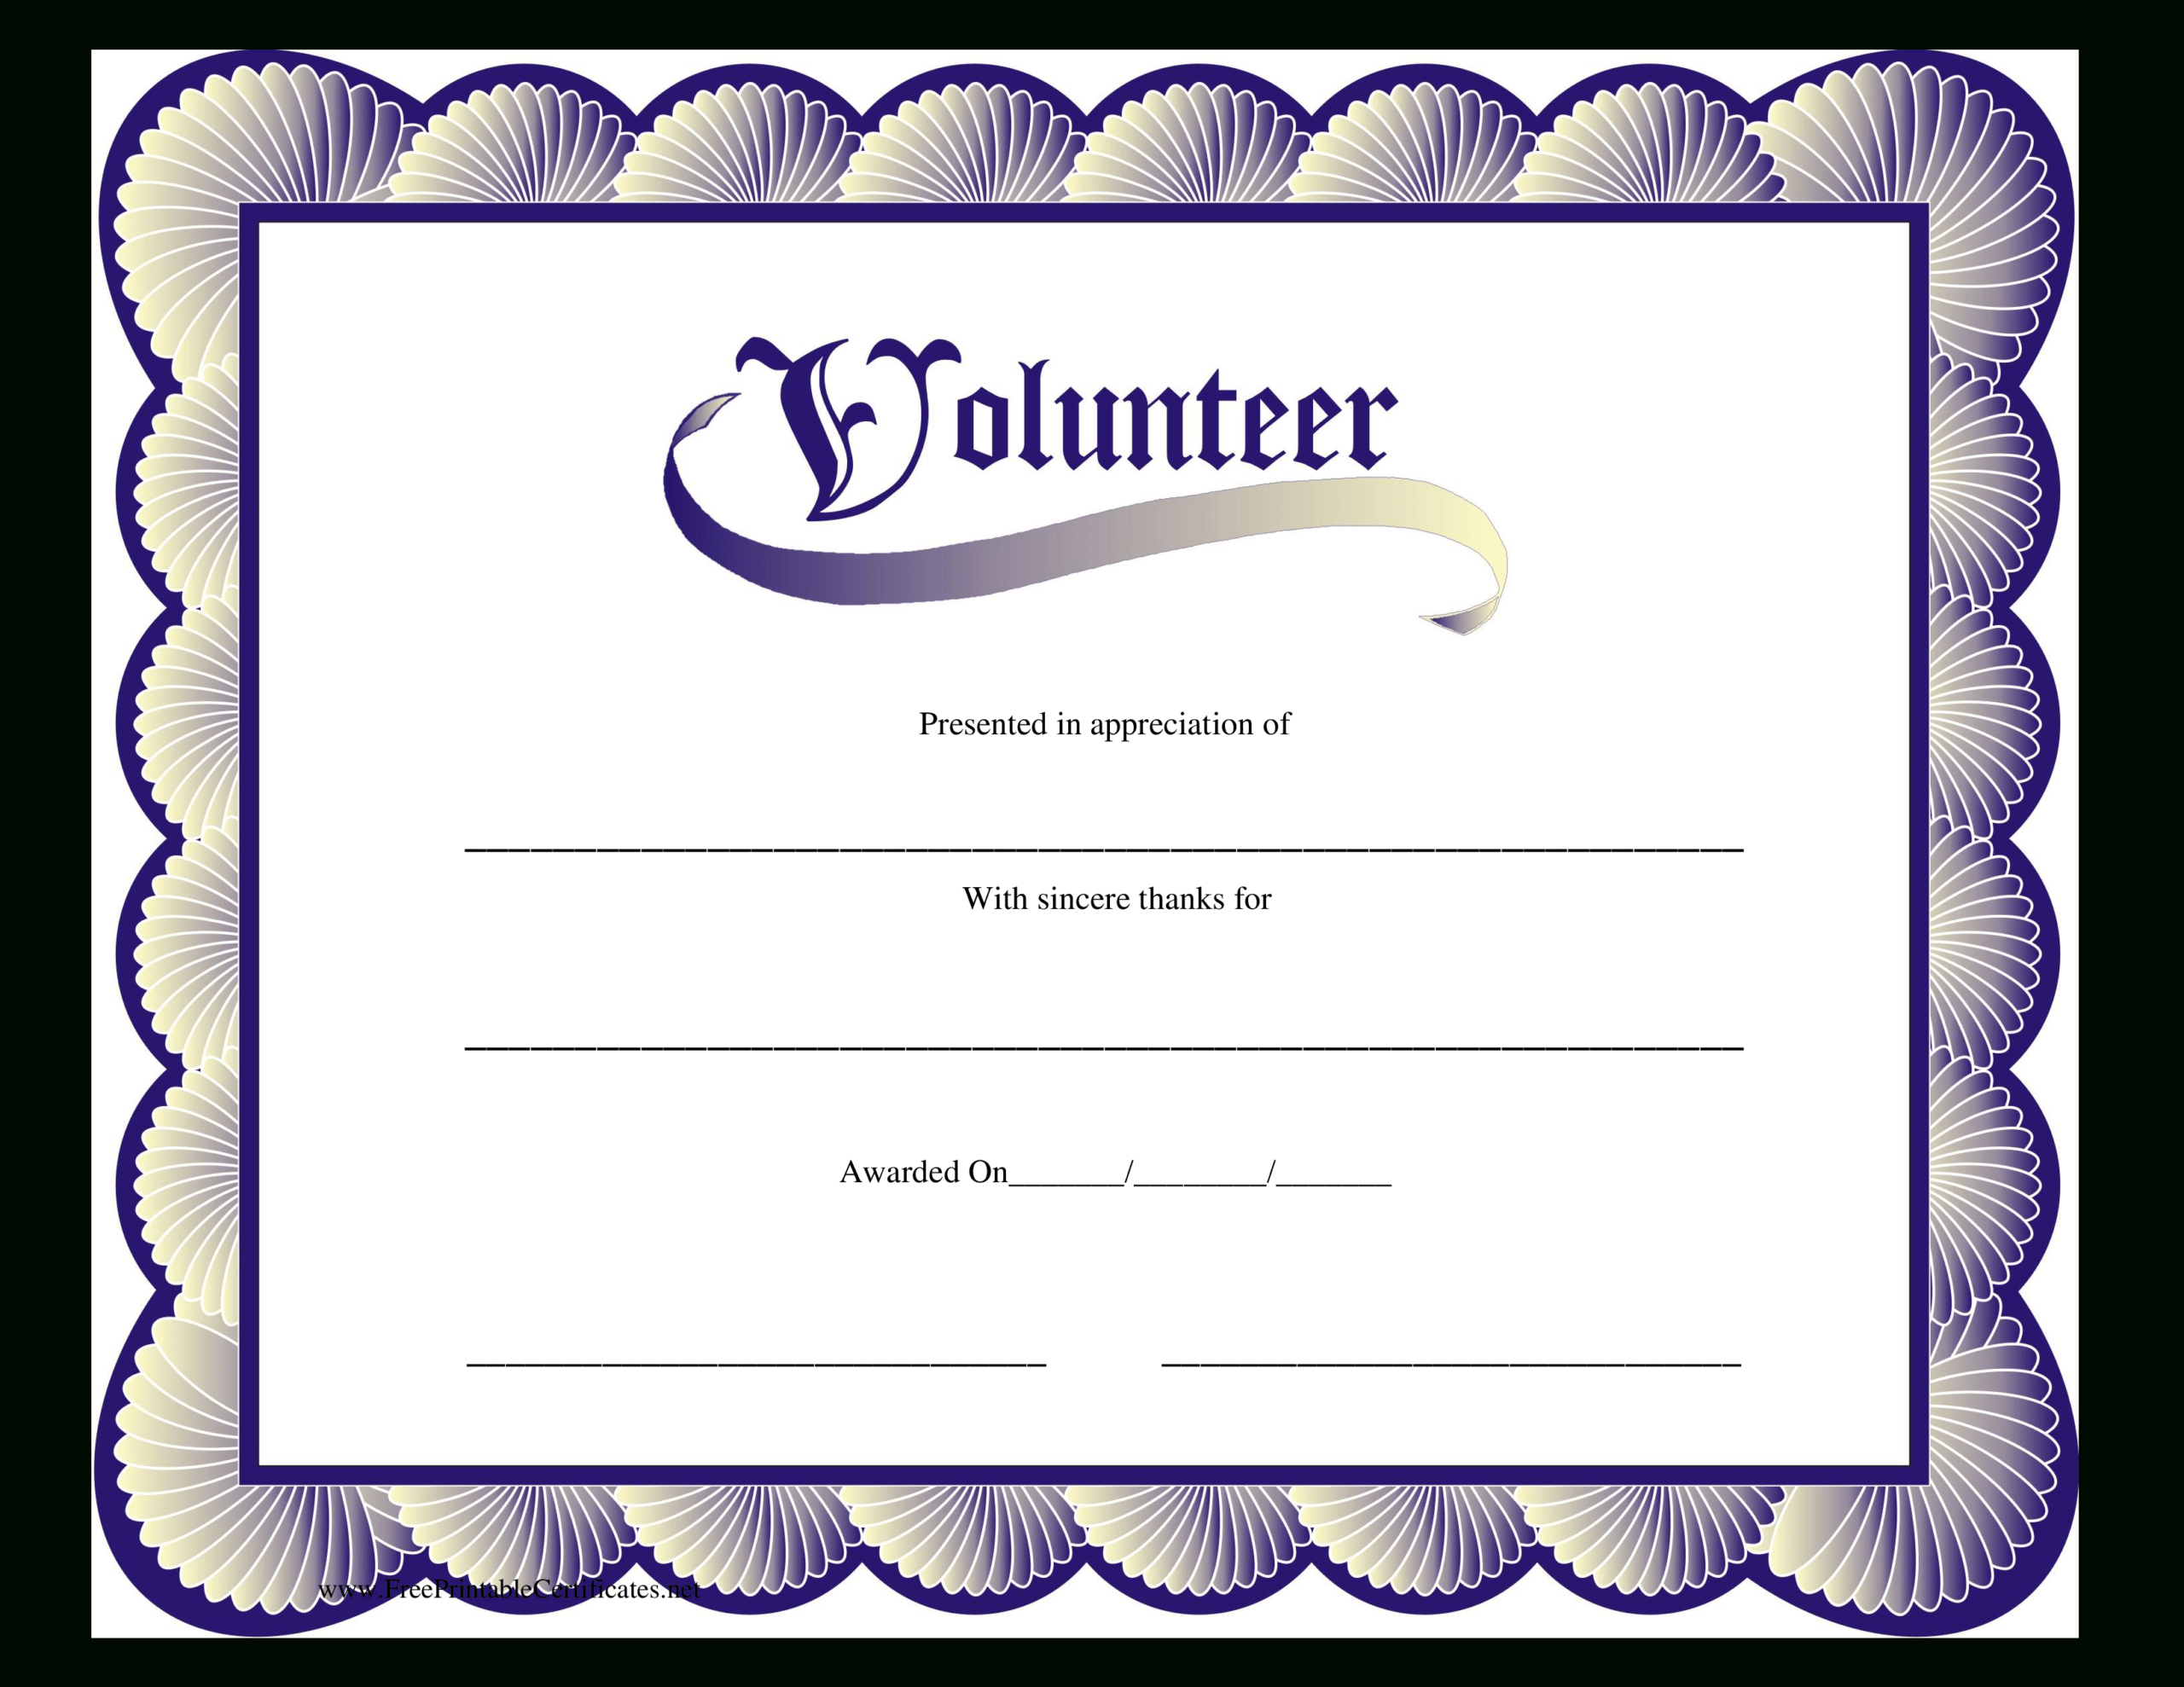 Volunteer Certificate | Templates At Allbusinesstemplates Regarding Volunteer Award Certificate Template